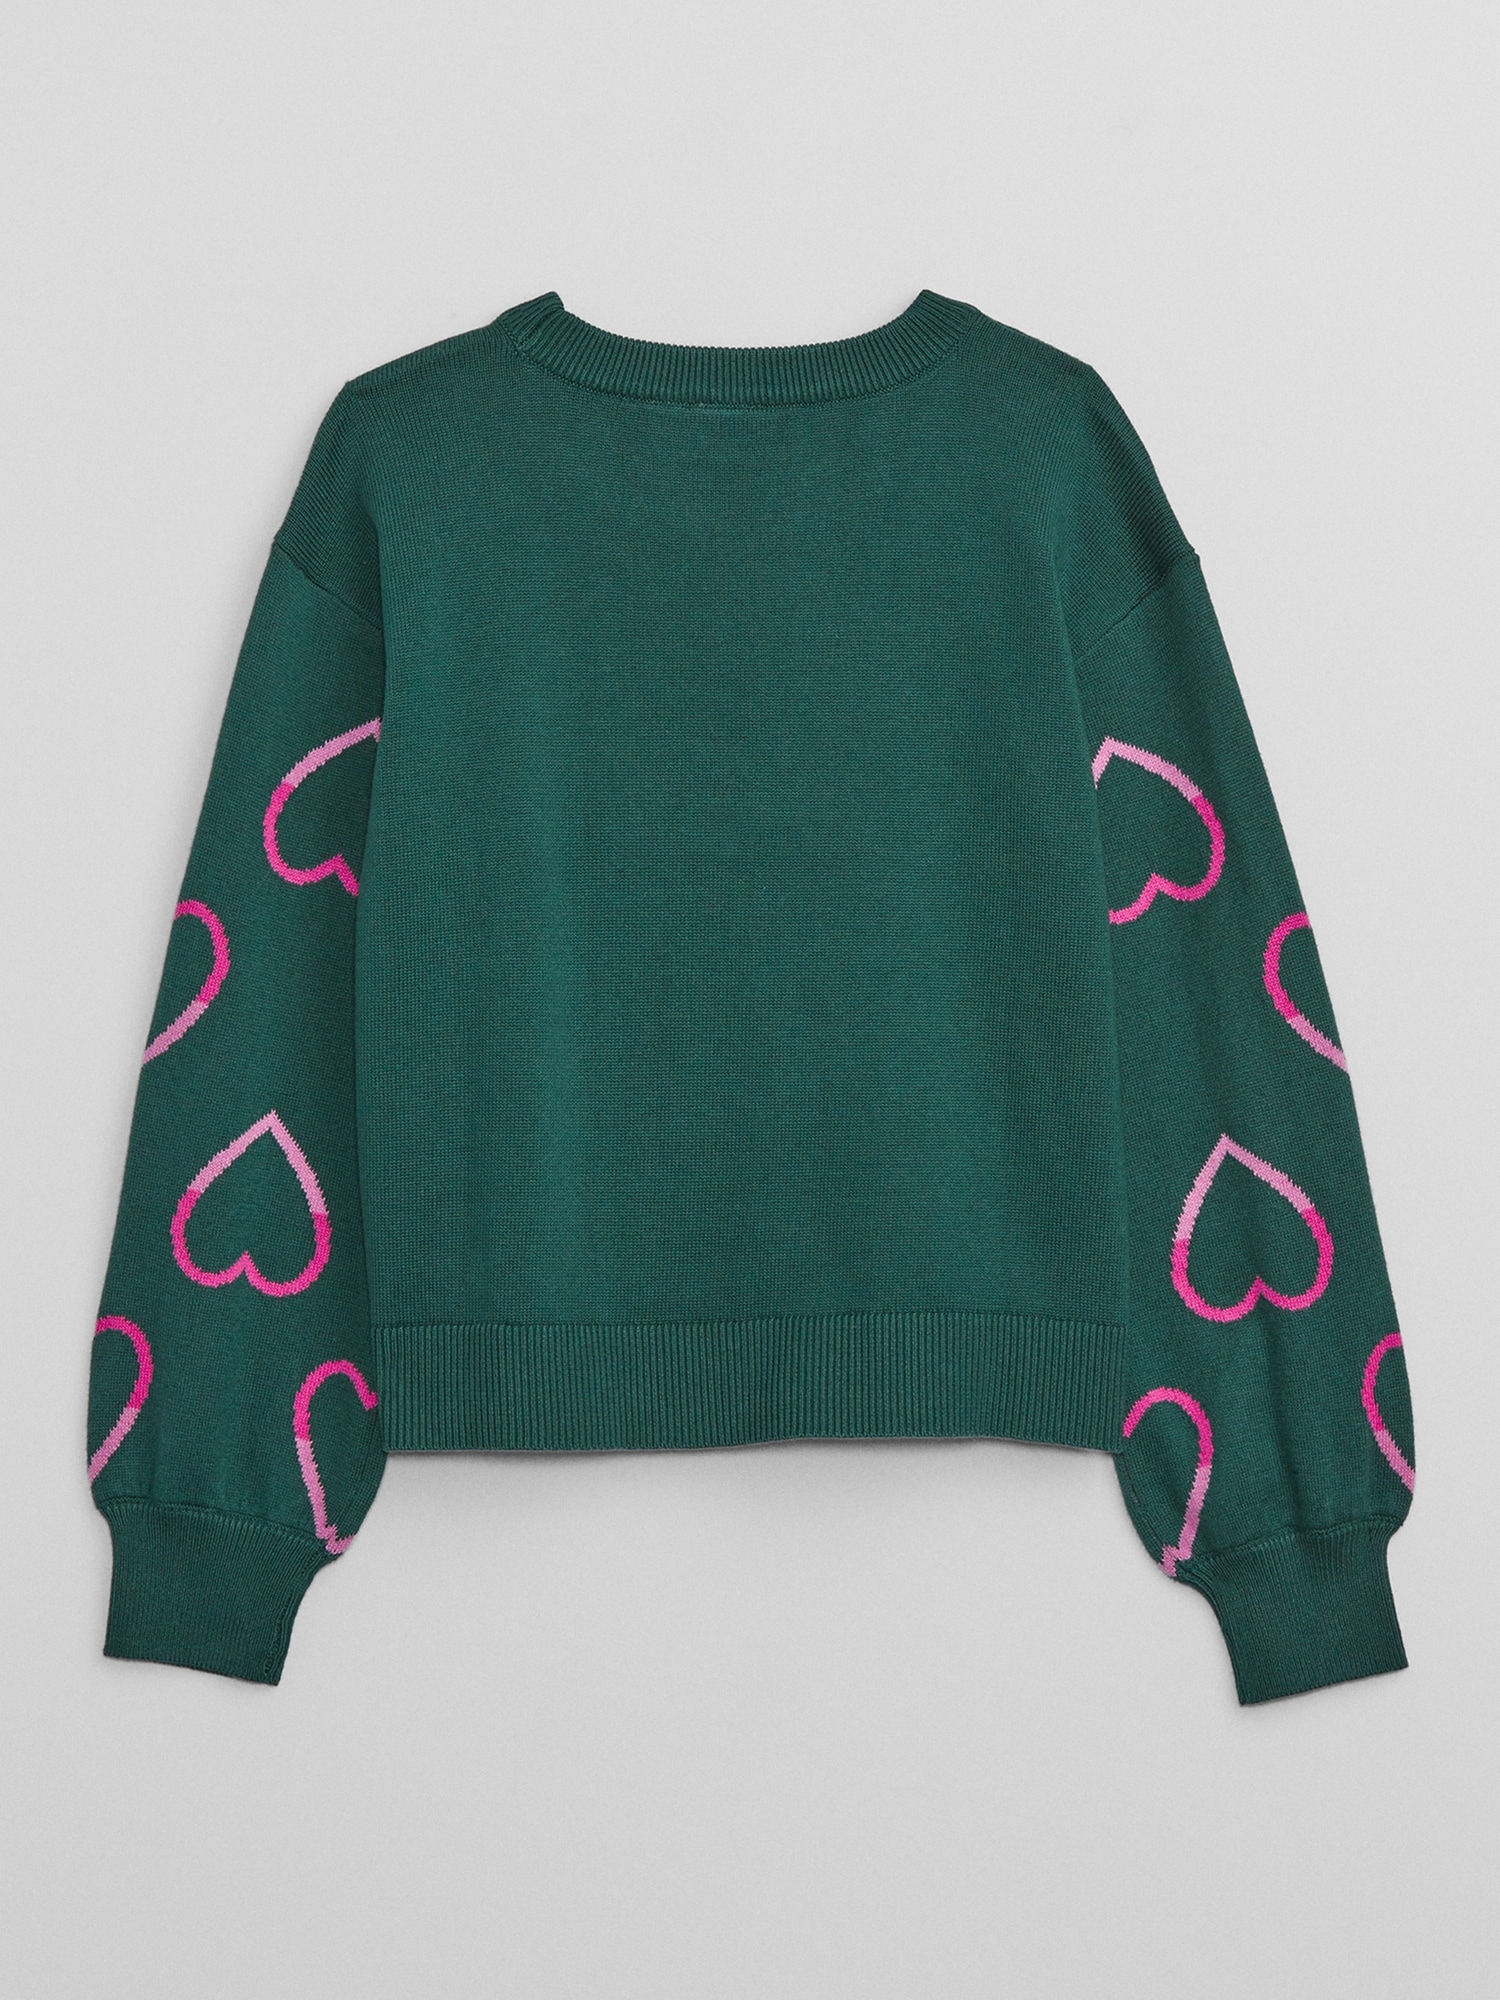 Kids Print Itarsia Sweater | Gap Factory